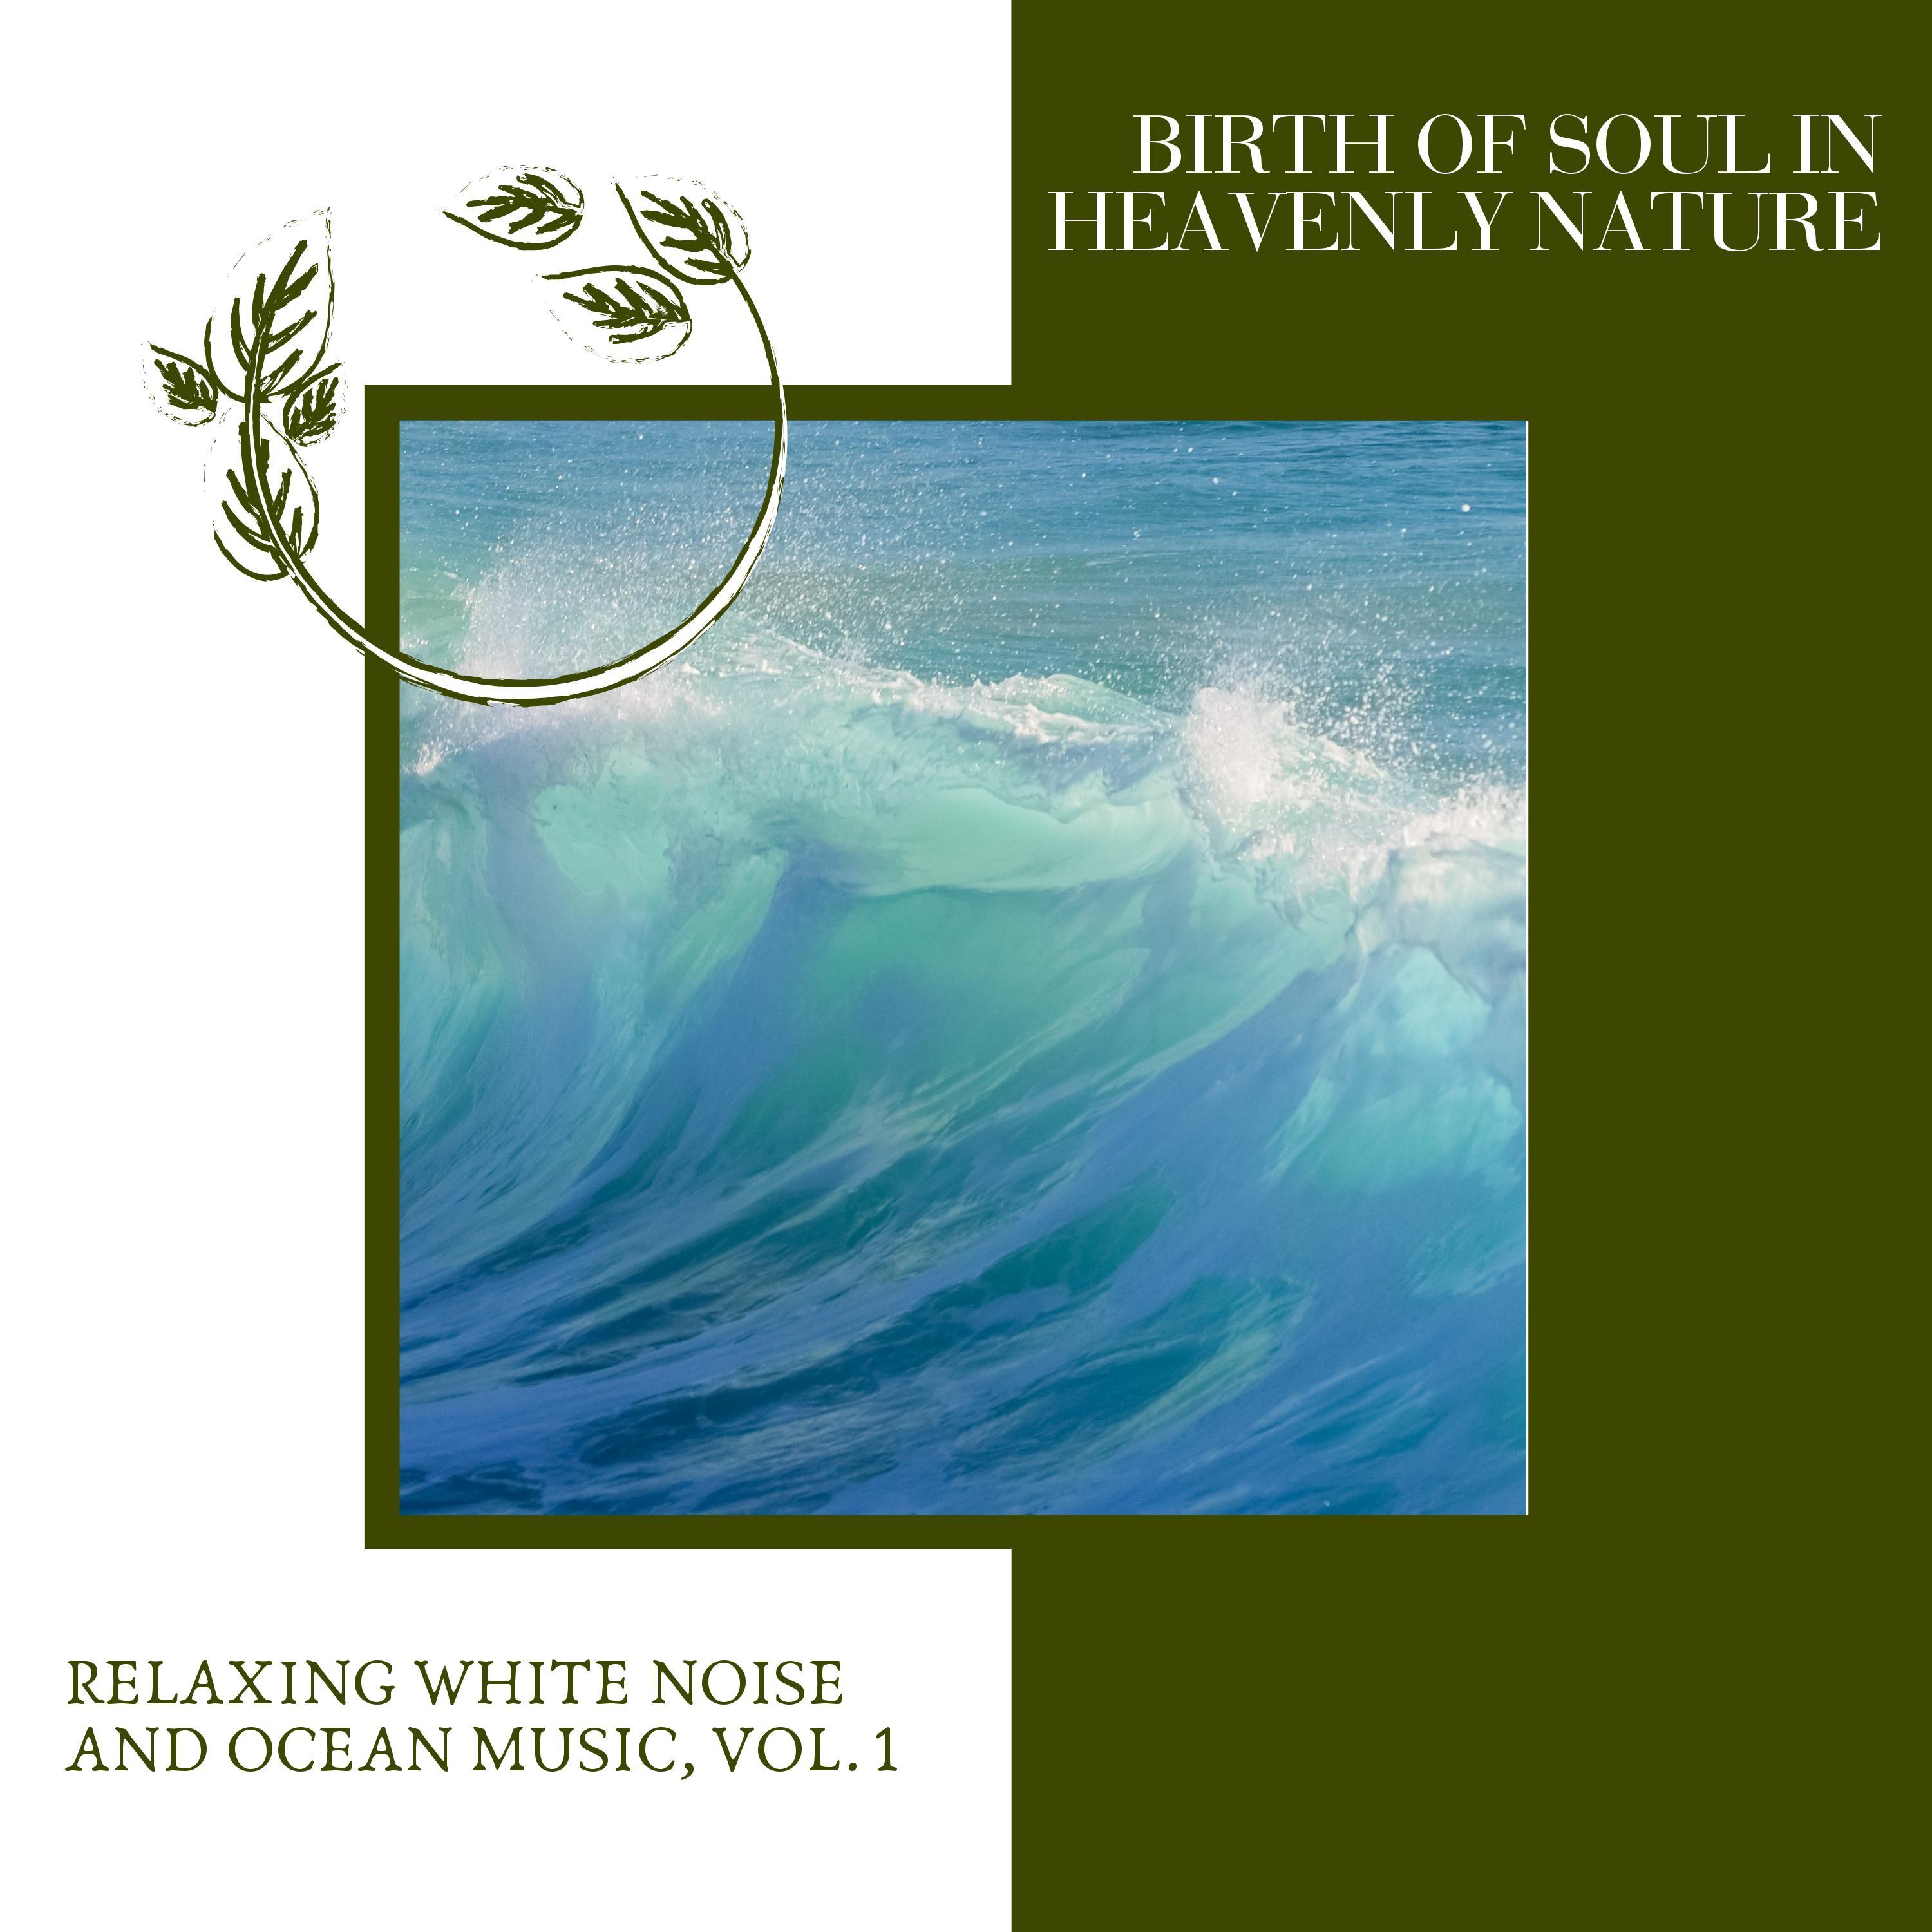 Blissful Ocean Music Library - Little Birds Sound